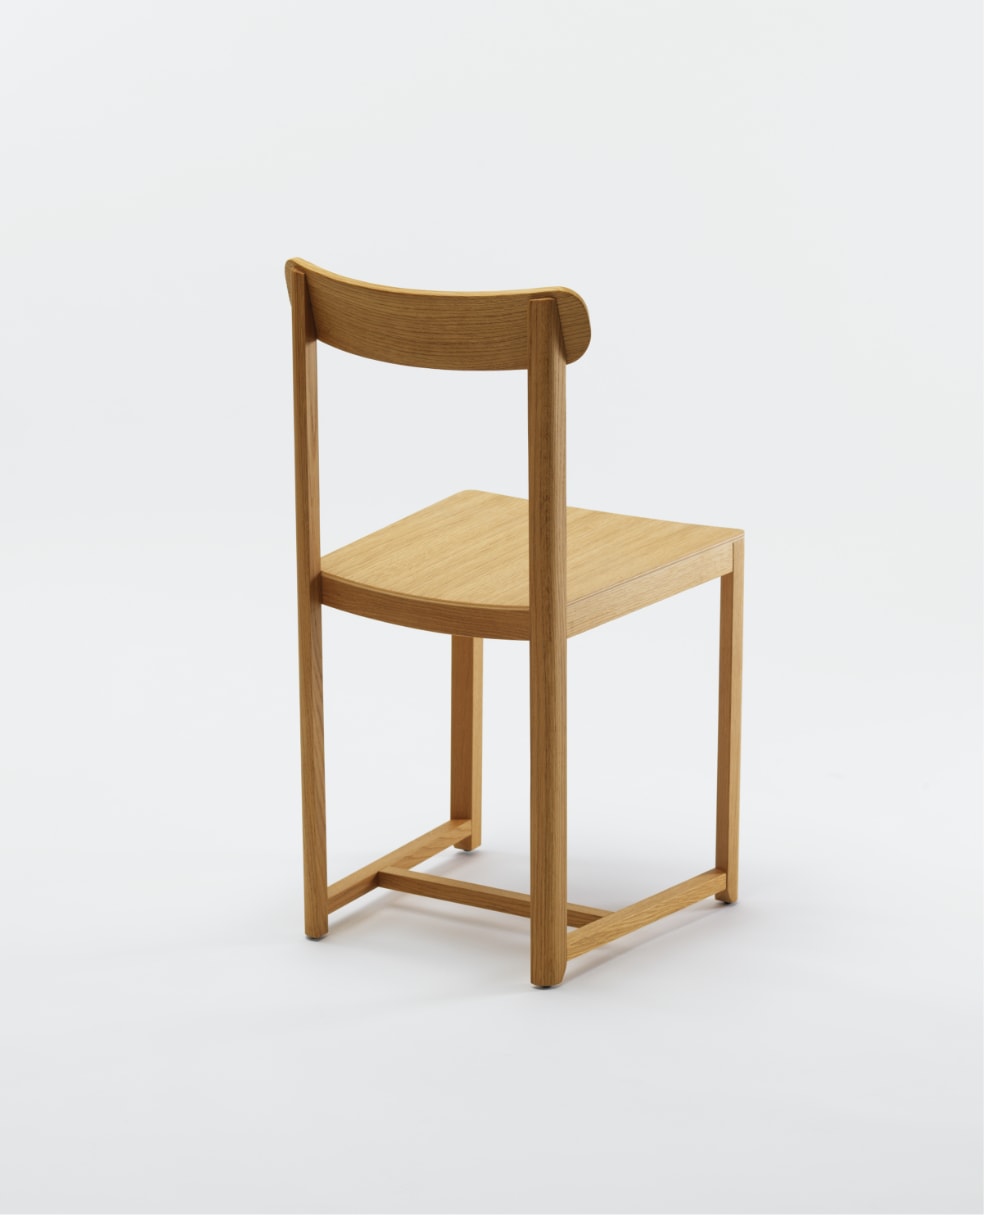 Furniture Design by London Studio Mentsen 6